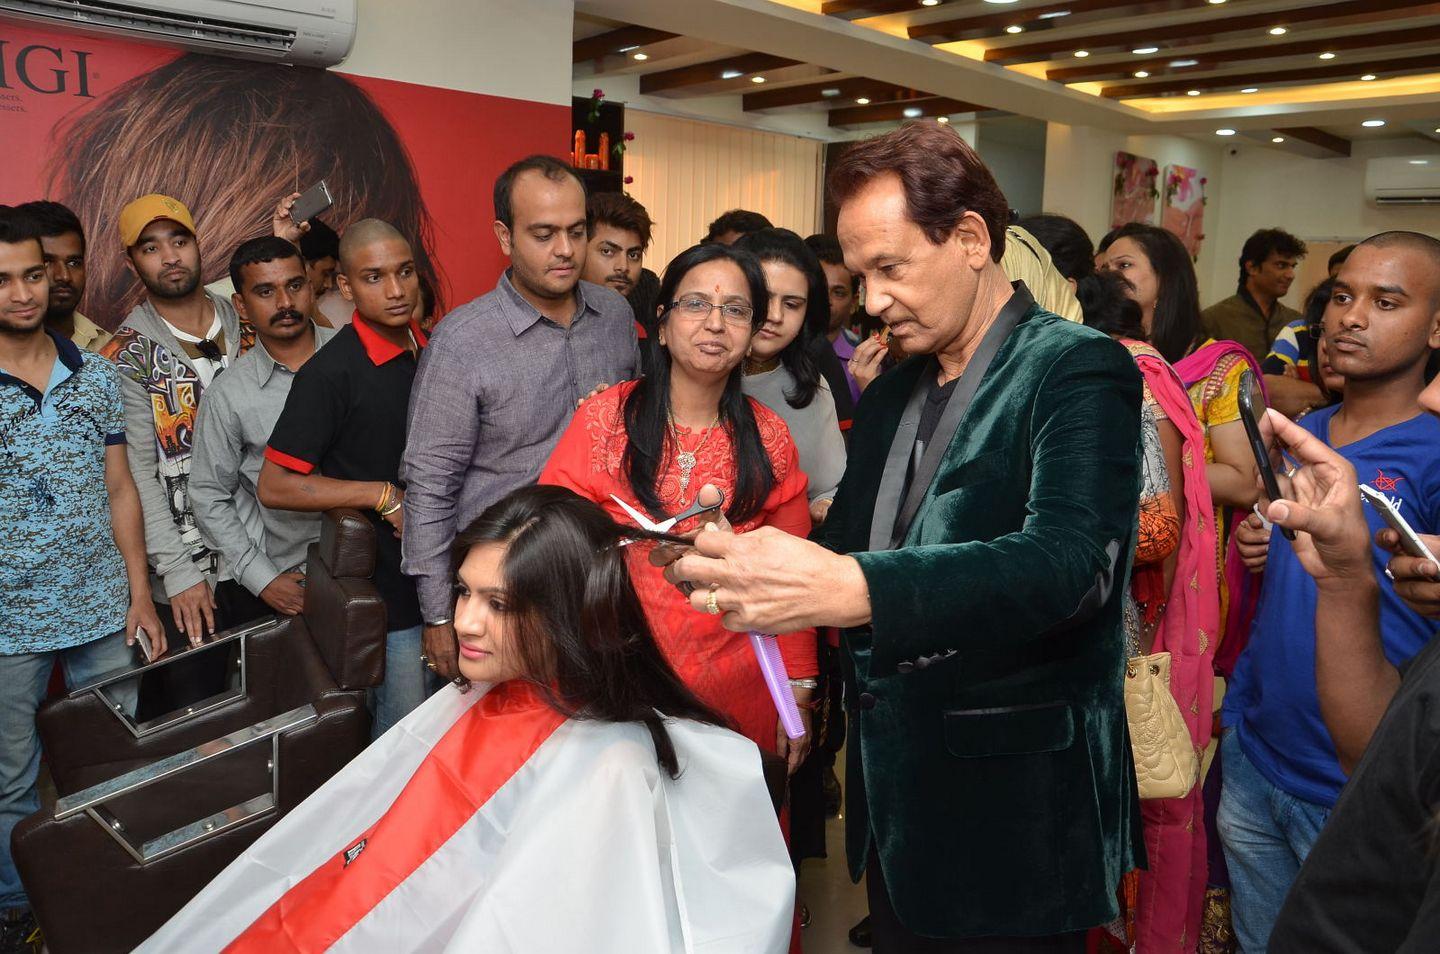 Habibs Hair Beauty Salon Launched Pics